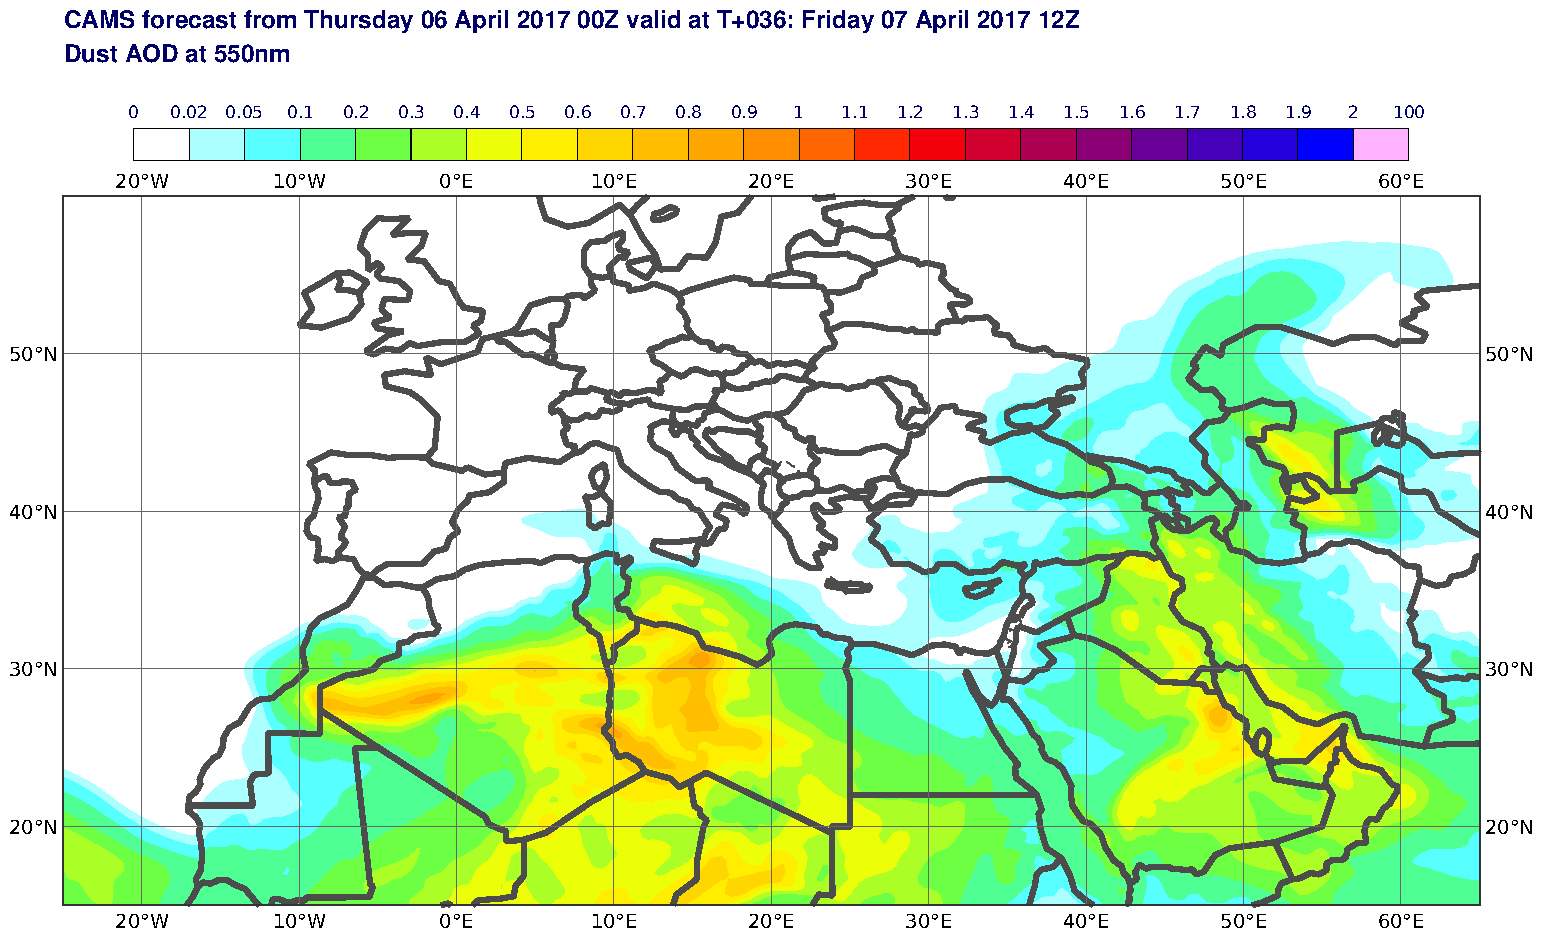 Dust AOD at 550nm valid at T36 - 2017-04-07 12:00